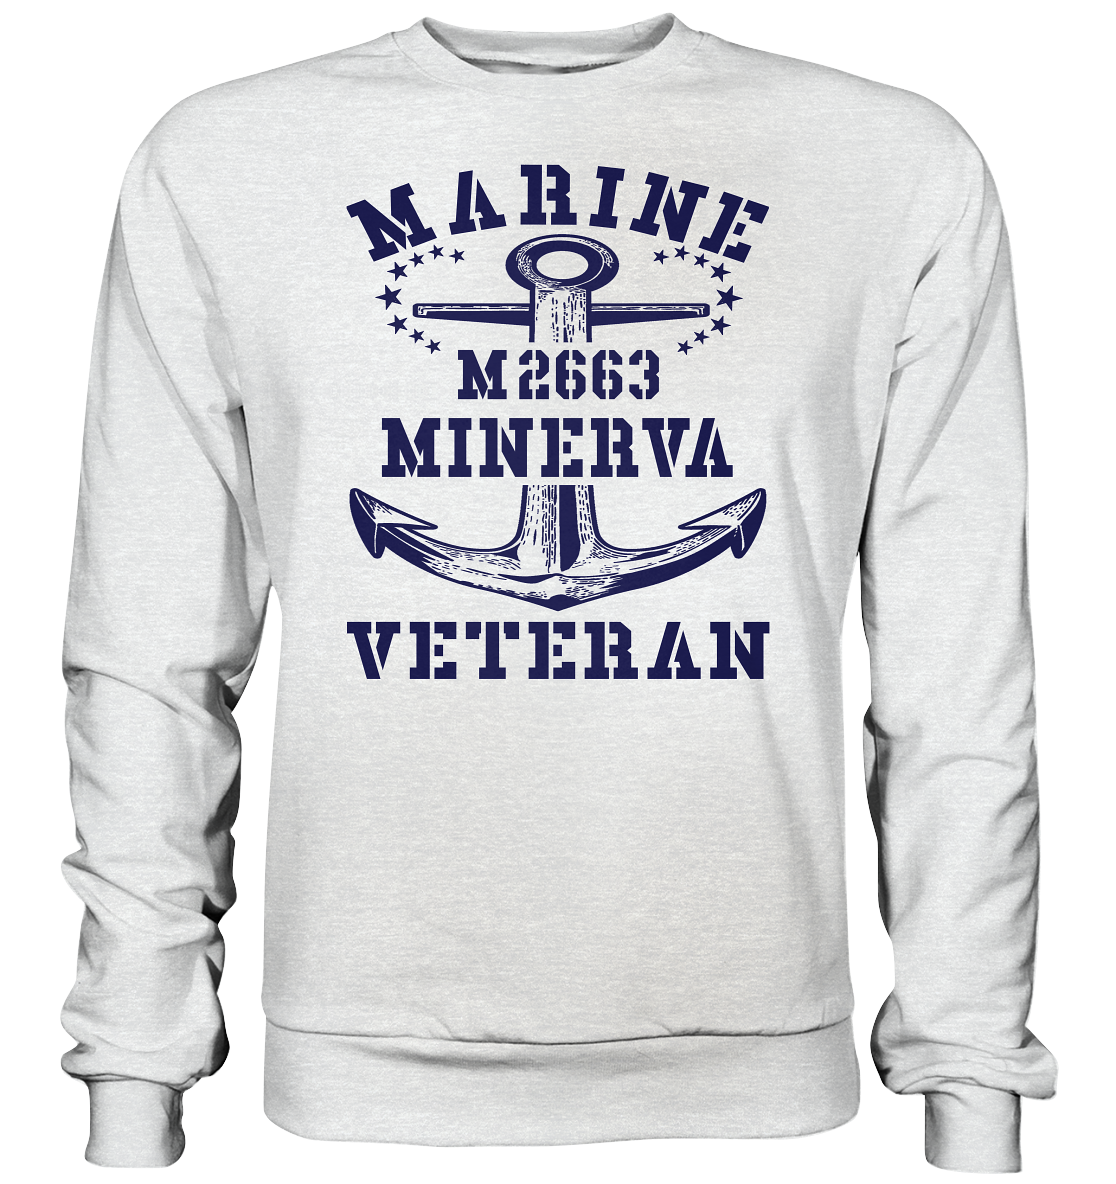 BiMi M2663 MINERVA Marine Veteran - Premium Sweatshirt